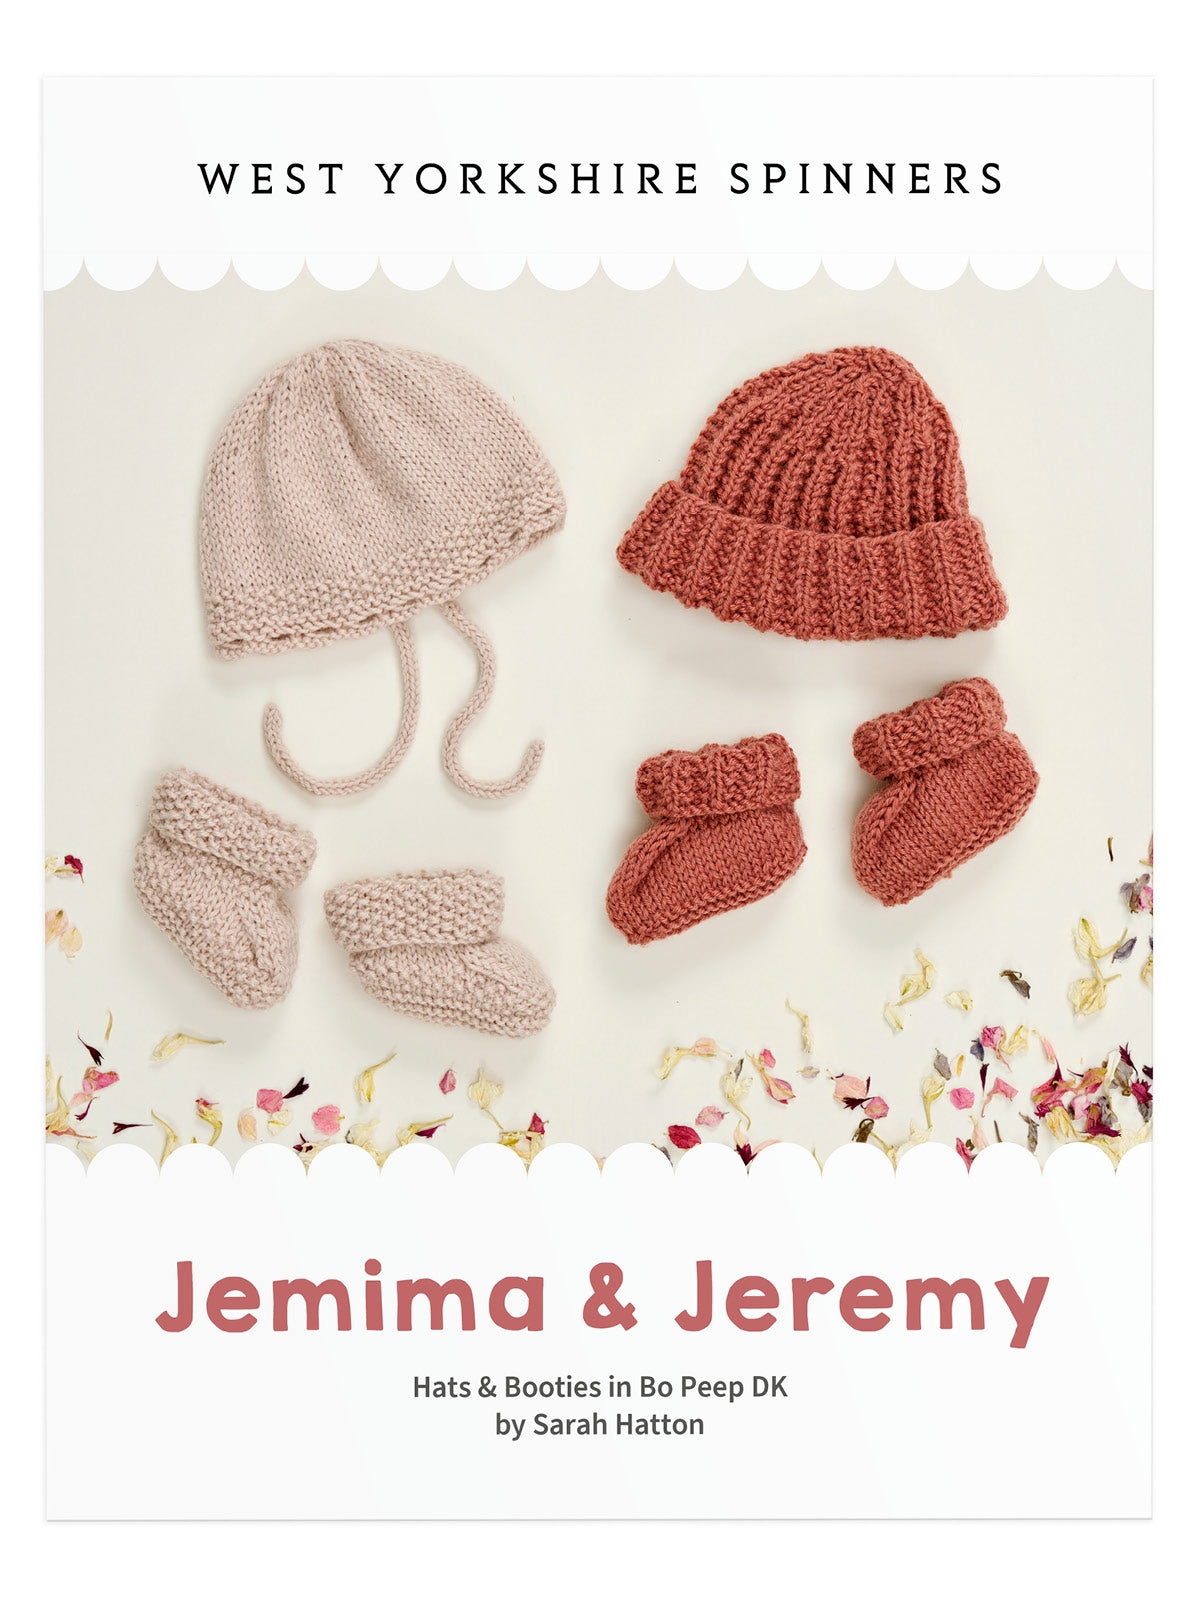 WYS Jemima & Jeremy: Hats & Booties in Bo Peep DK by Sarah Hatton